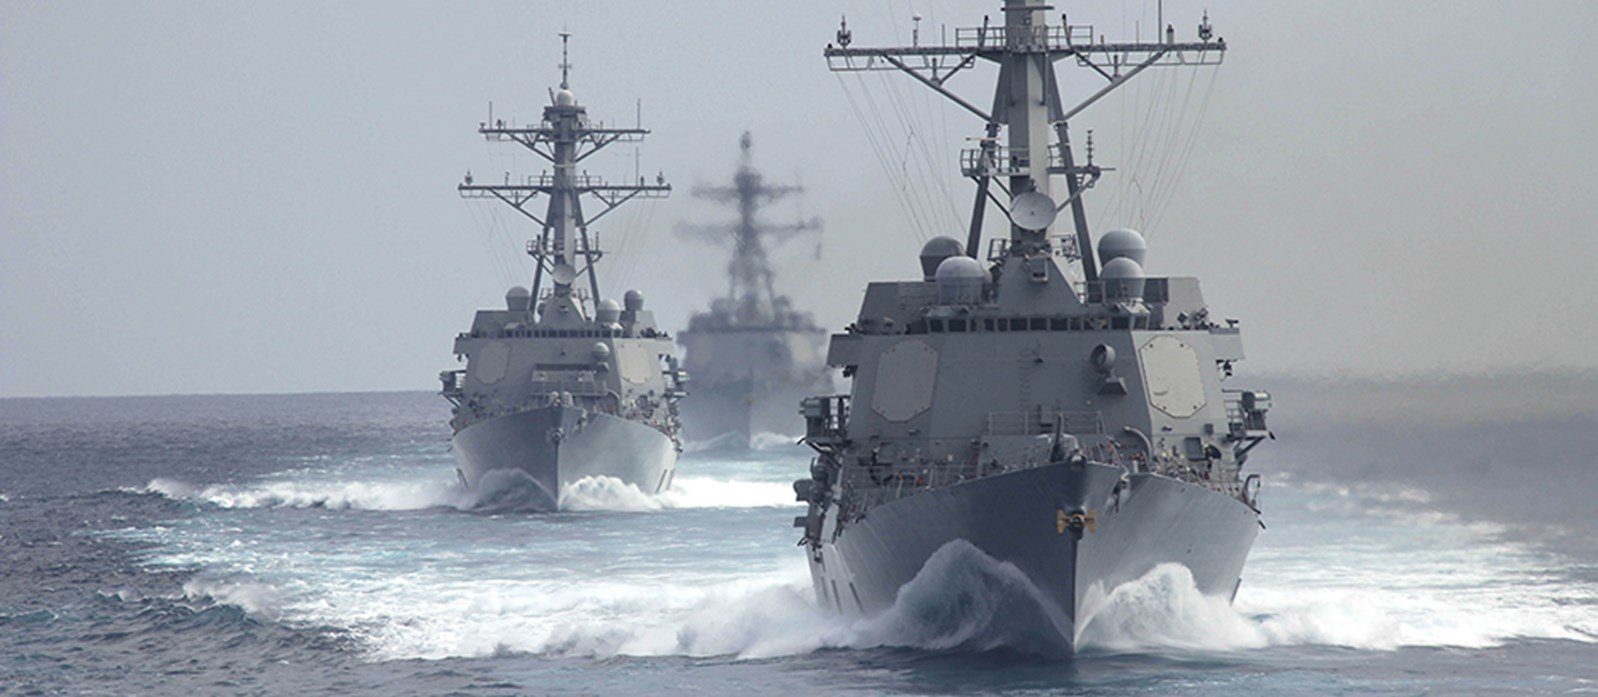 Navy destroyer ships